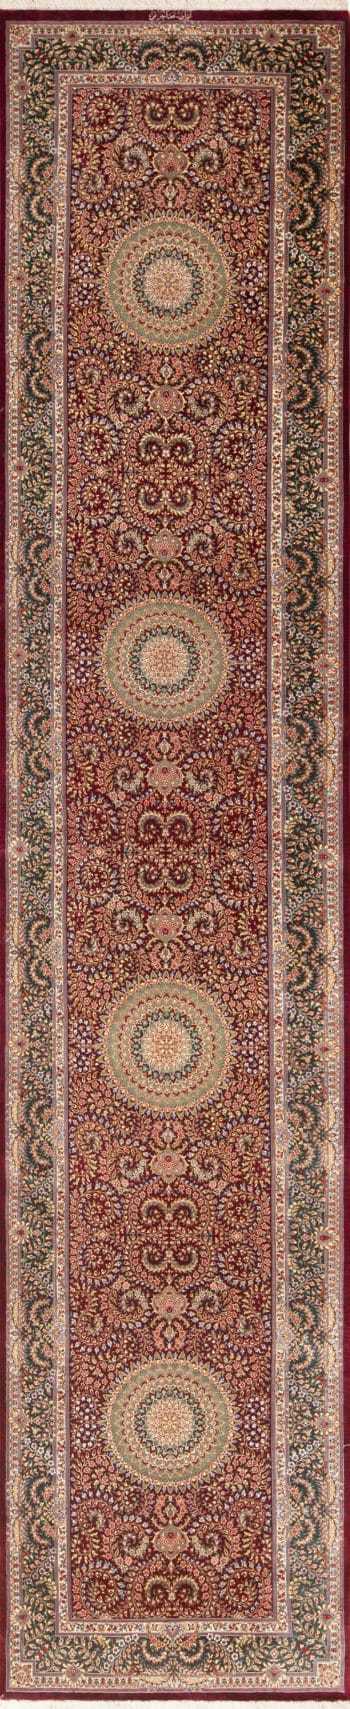 Luxurious Fine Floral Vintage Persian Silk Qum Hallway Runner Rug 72790 by Nazmiyal Antique Rugs